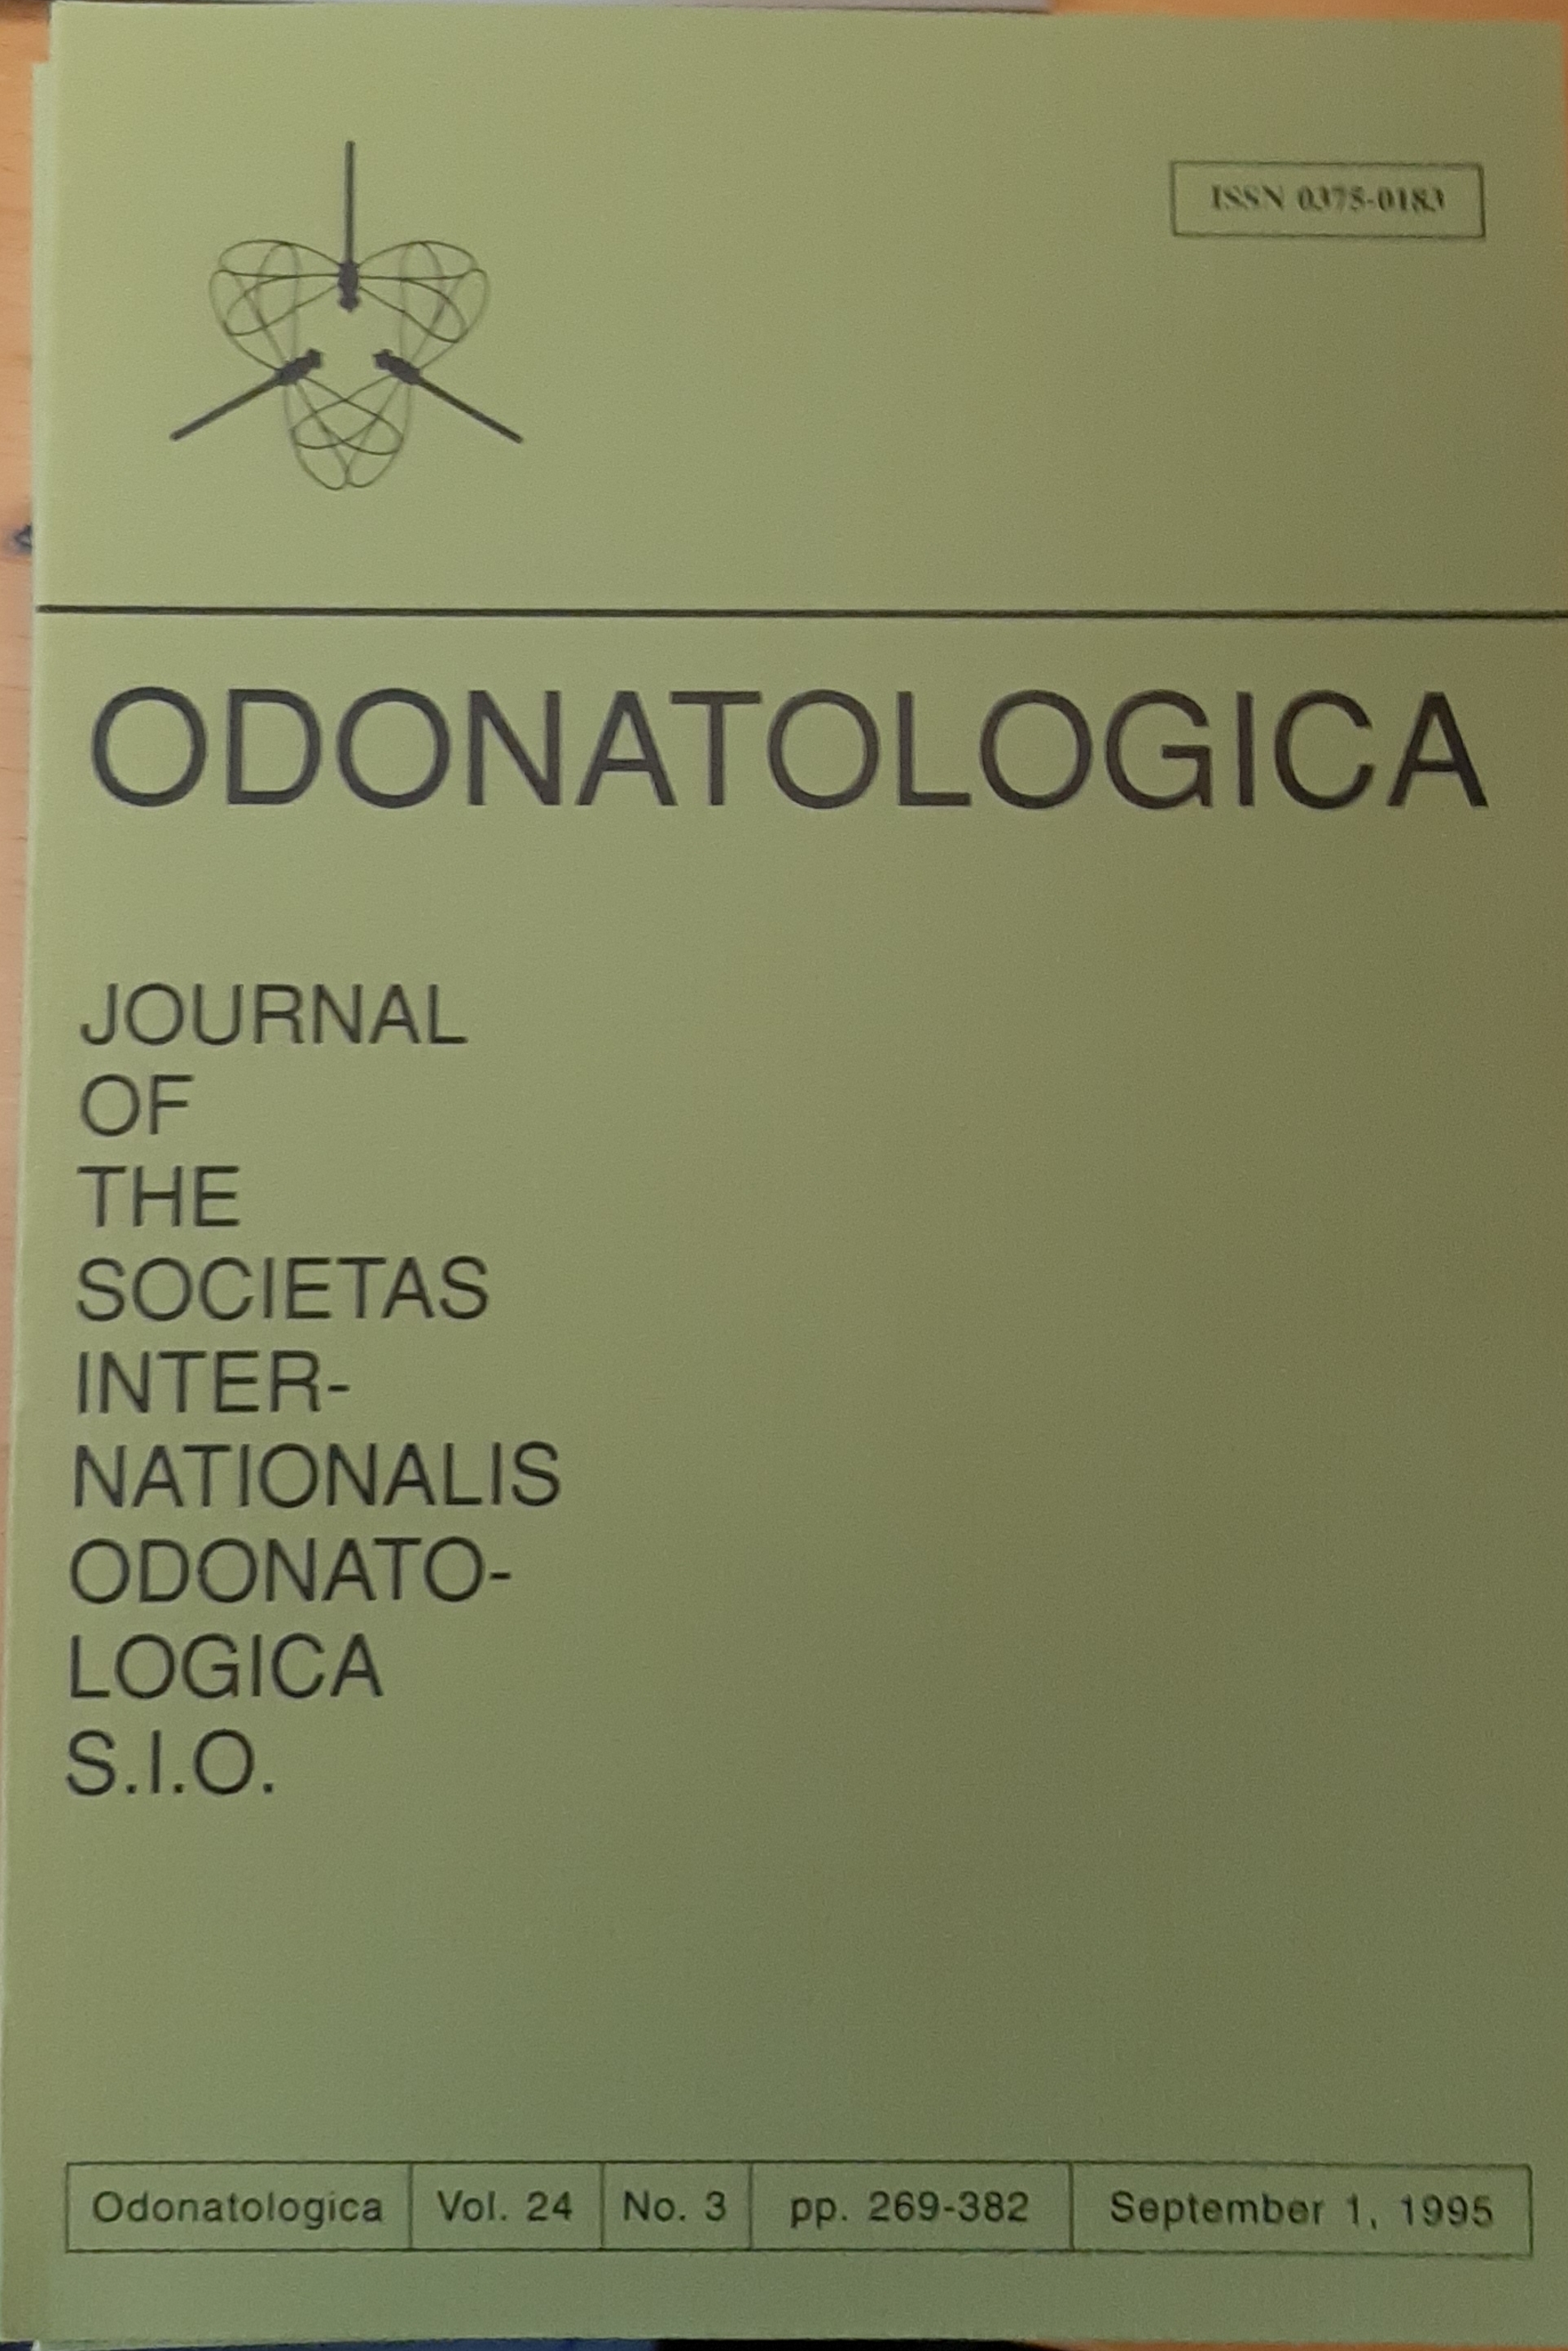 Odonatologica 1995/24. évf. 3. szám Journal of the Societas Internationalis Odonatologica S.I.O. (Rippl-Rónai Múzeum RR-F)